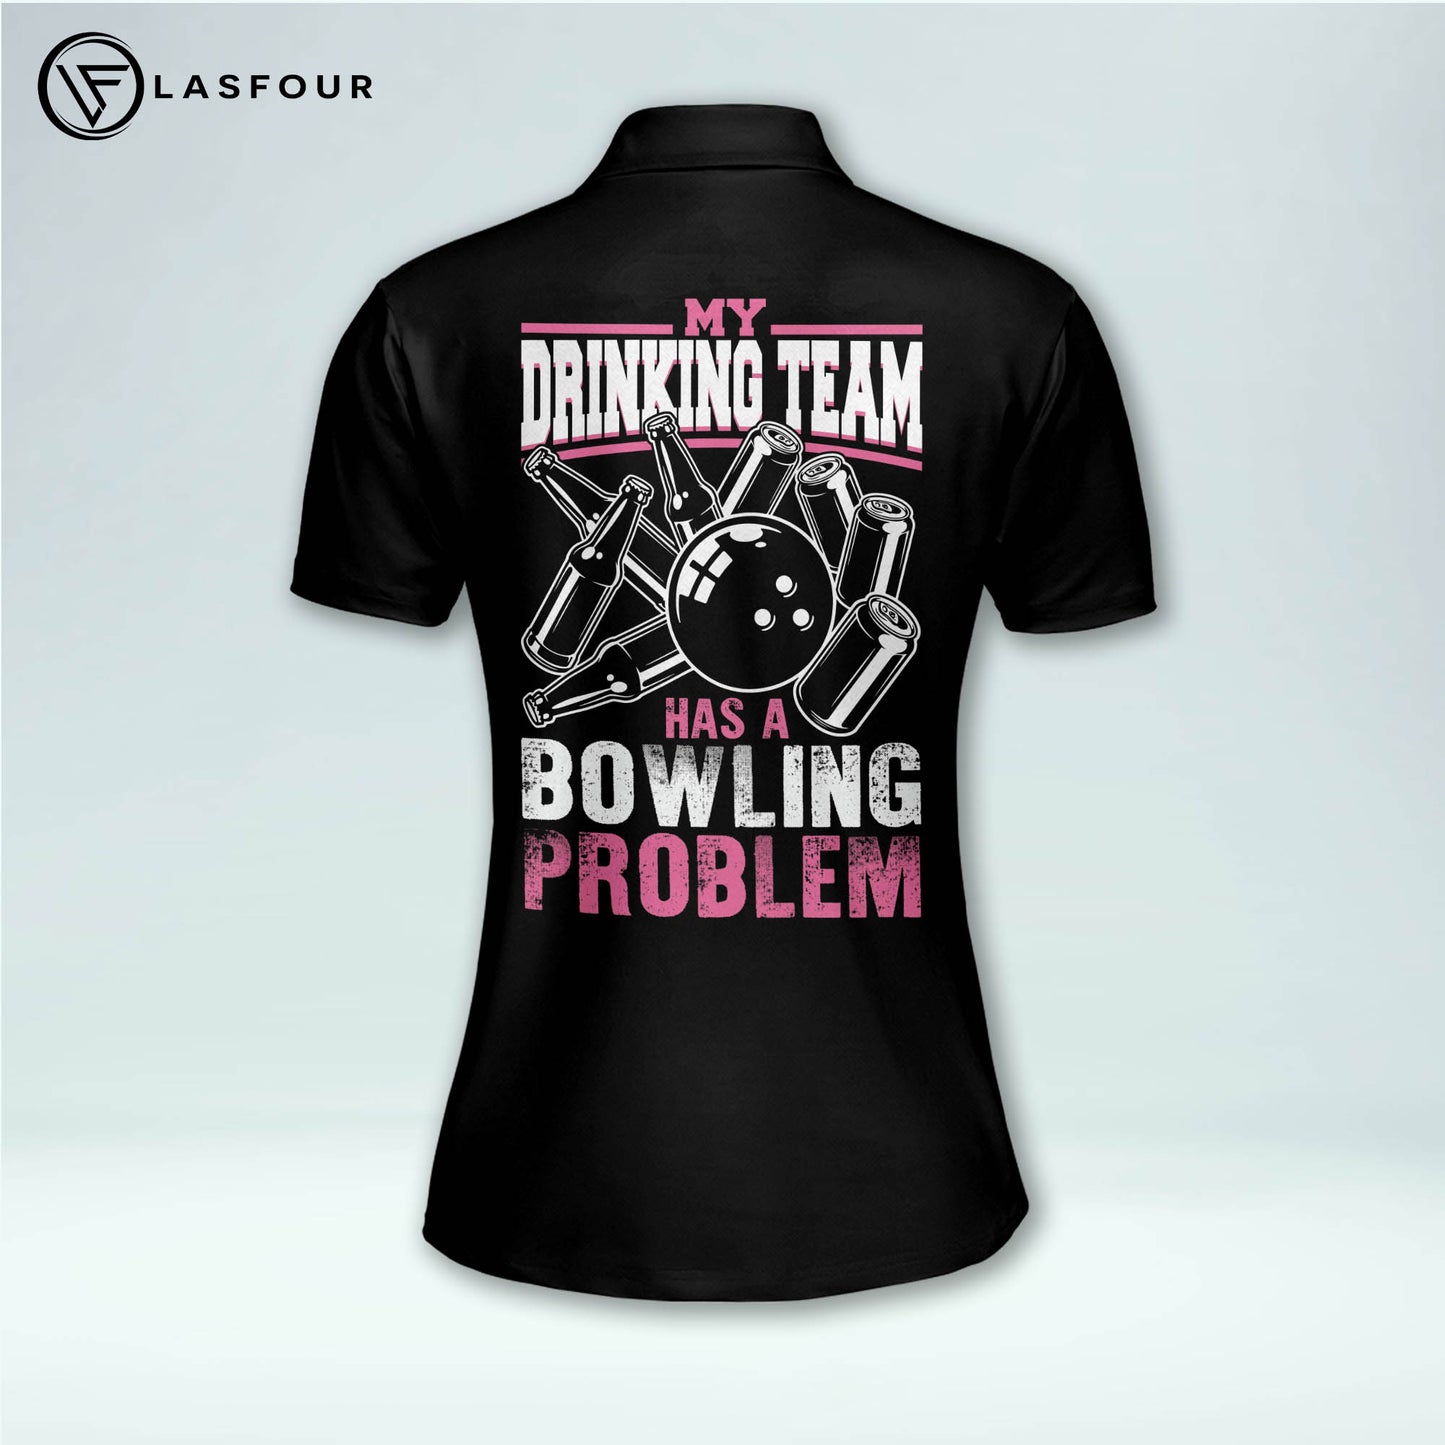 Has A Problem Bowling Shirts Women BW0113